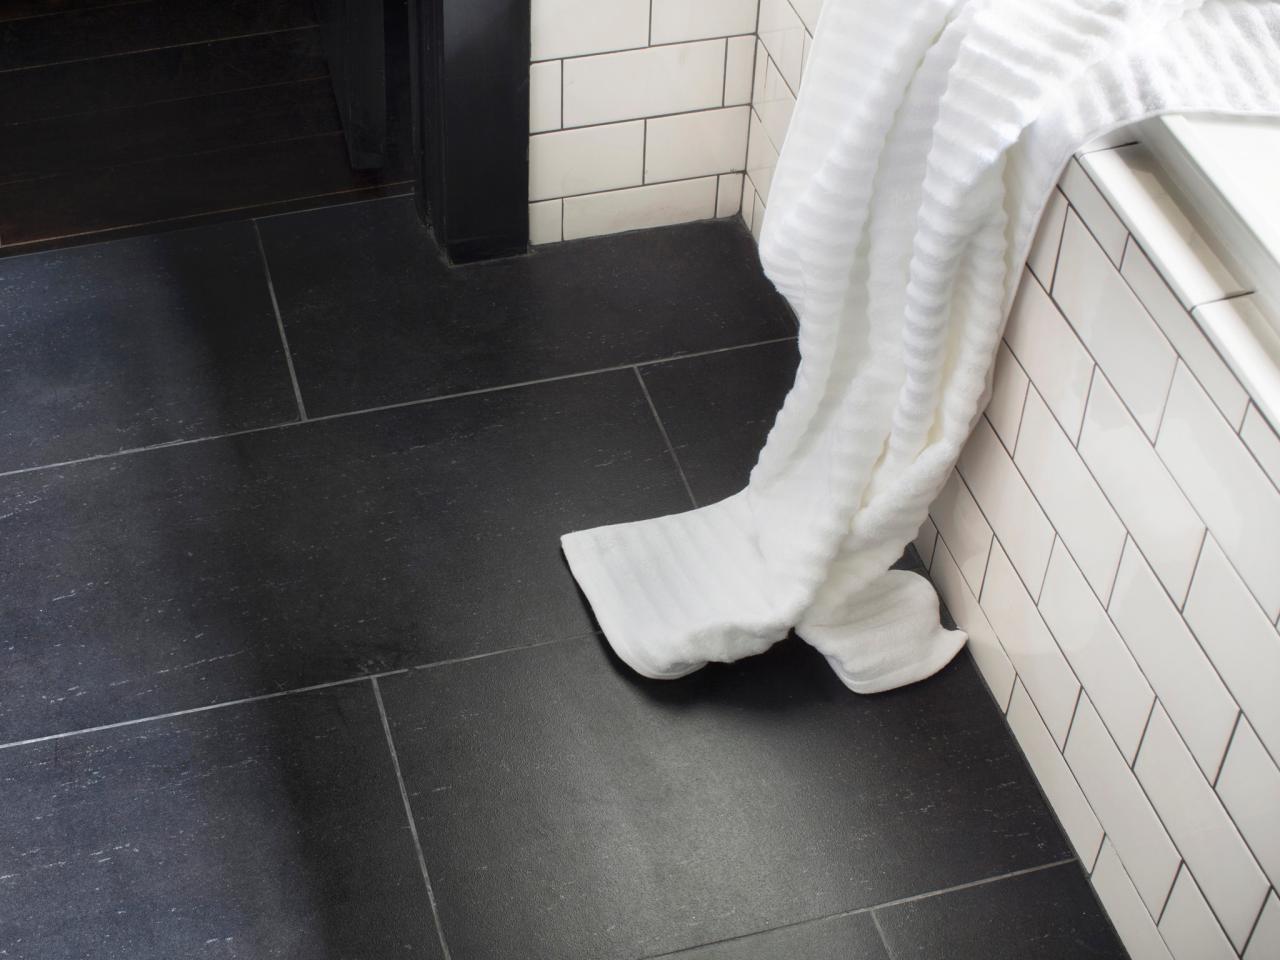 hgtv-bathroom-tiles-original-bpf-black-white-bathroom-floor-tile-h-jpg-rend-hgtvcom-1280-960